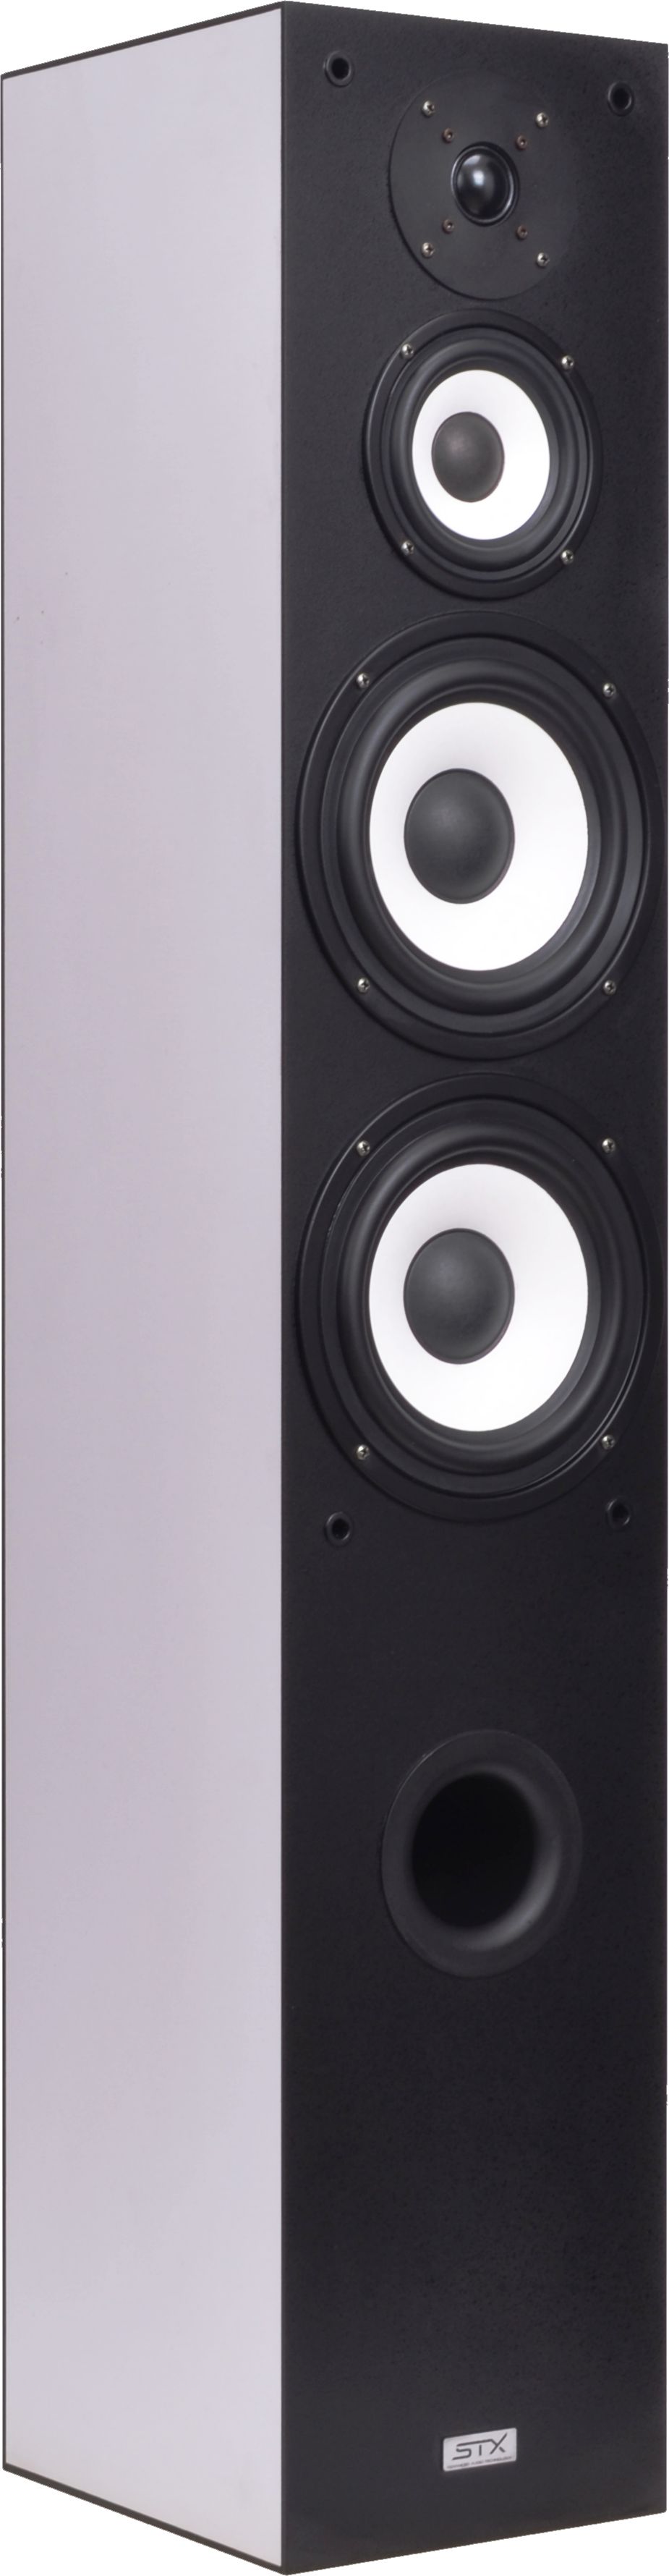 STX Graviton 250 speakers